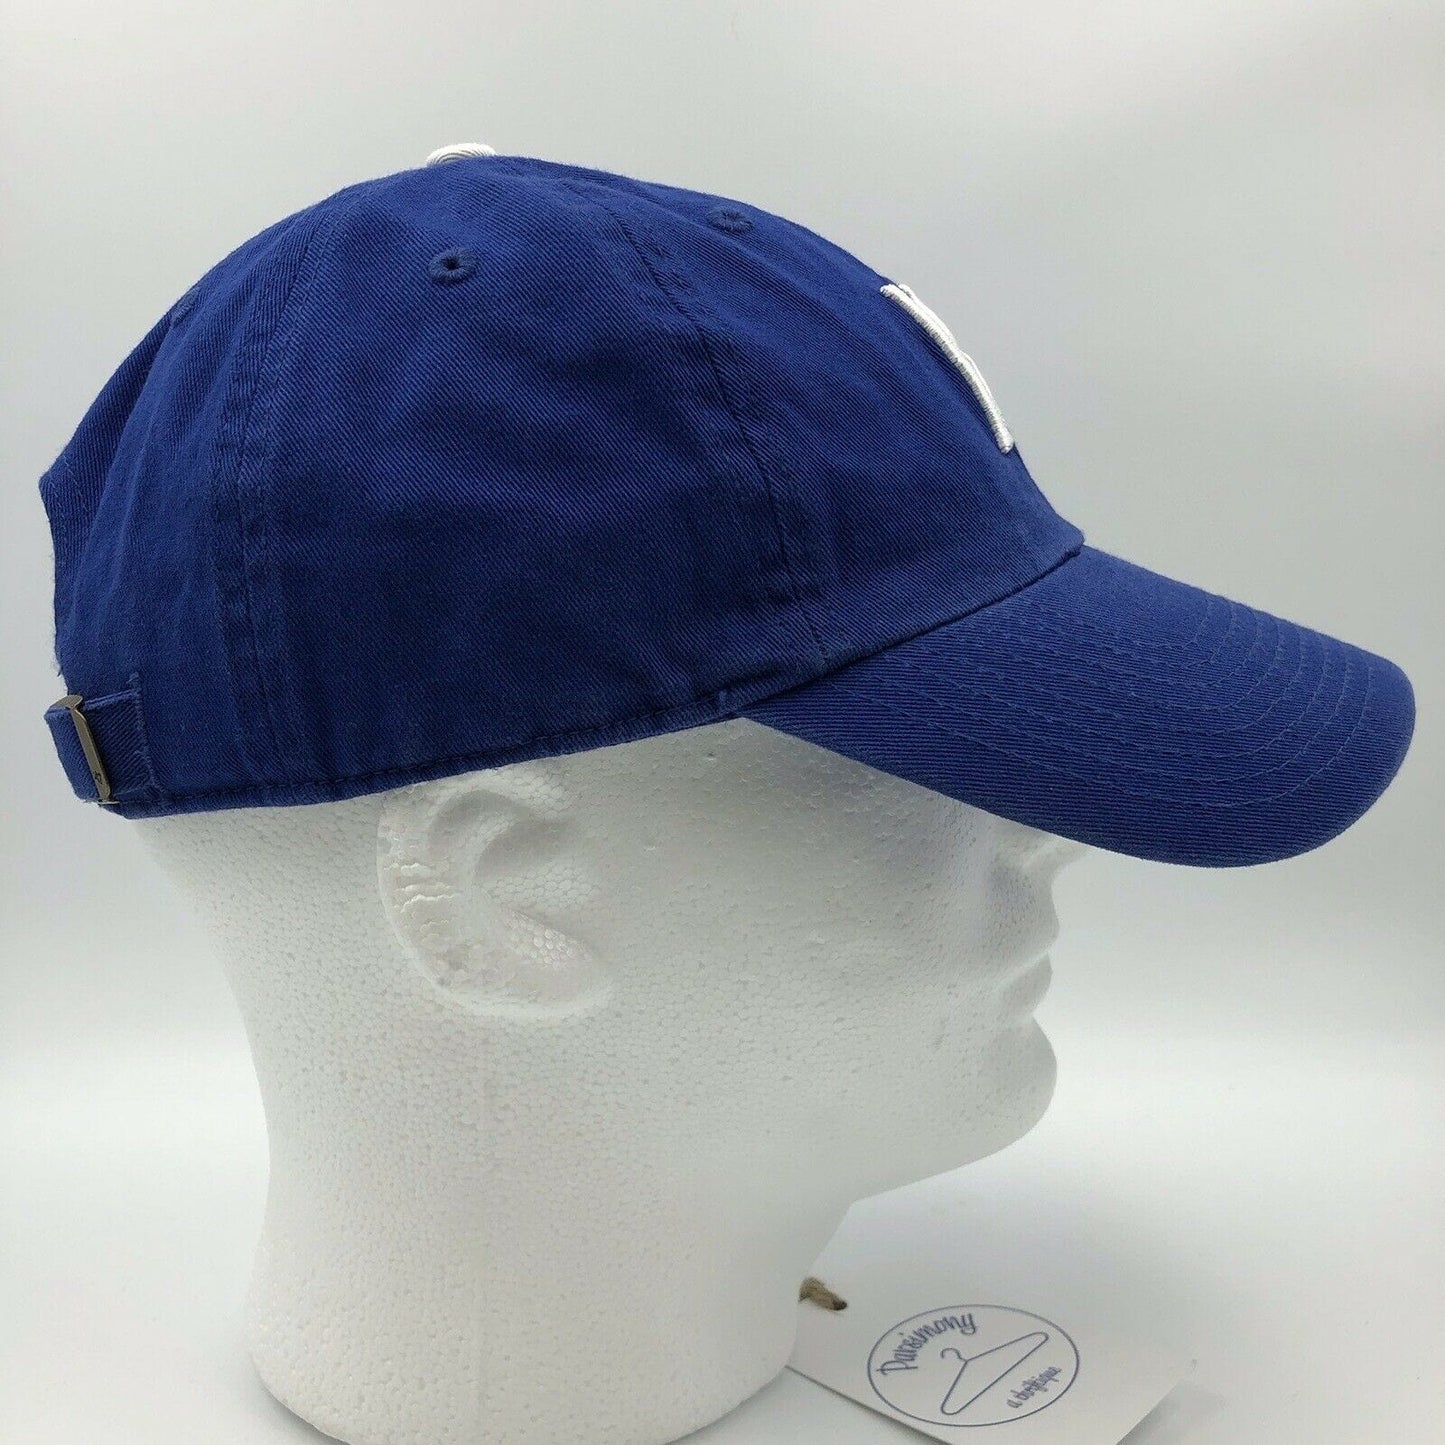 ‘47 Brand MLB GM Kansas City Royals Hat Blue “KC” Adjustable Strapback Ball Cap